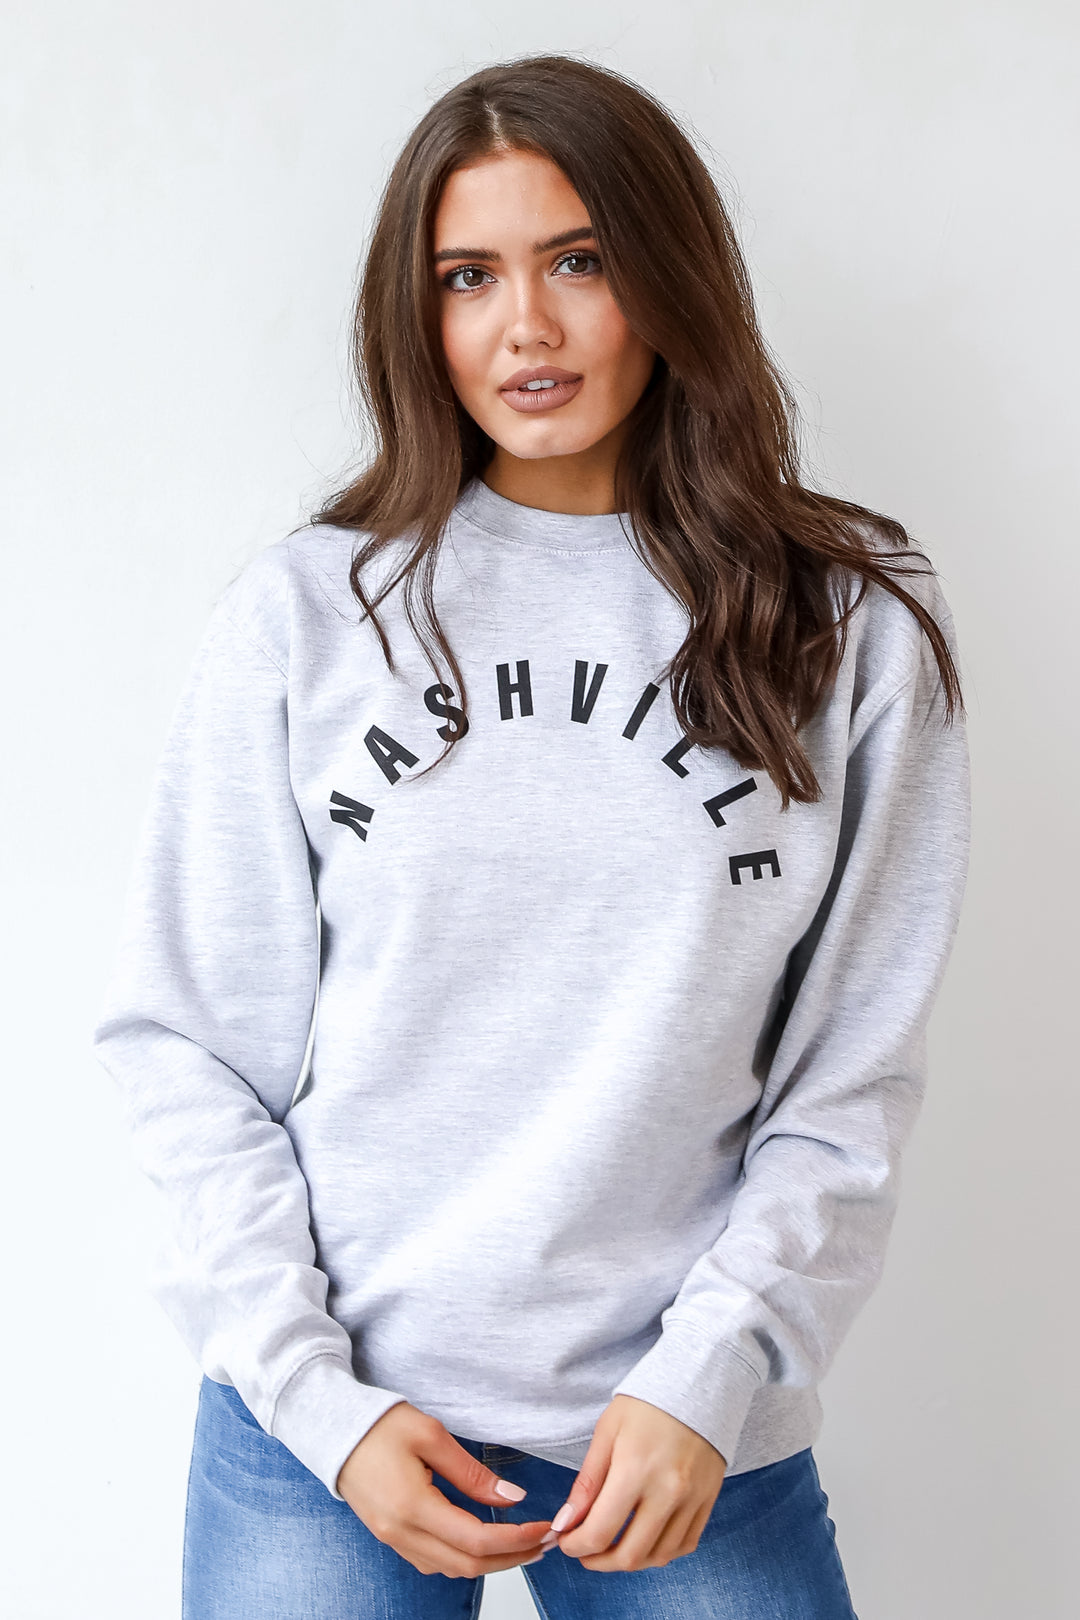 Nashville Sweatshirt, Graphic Sweatshirt, Comfy Trendy Sweatshirt